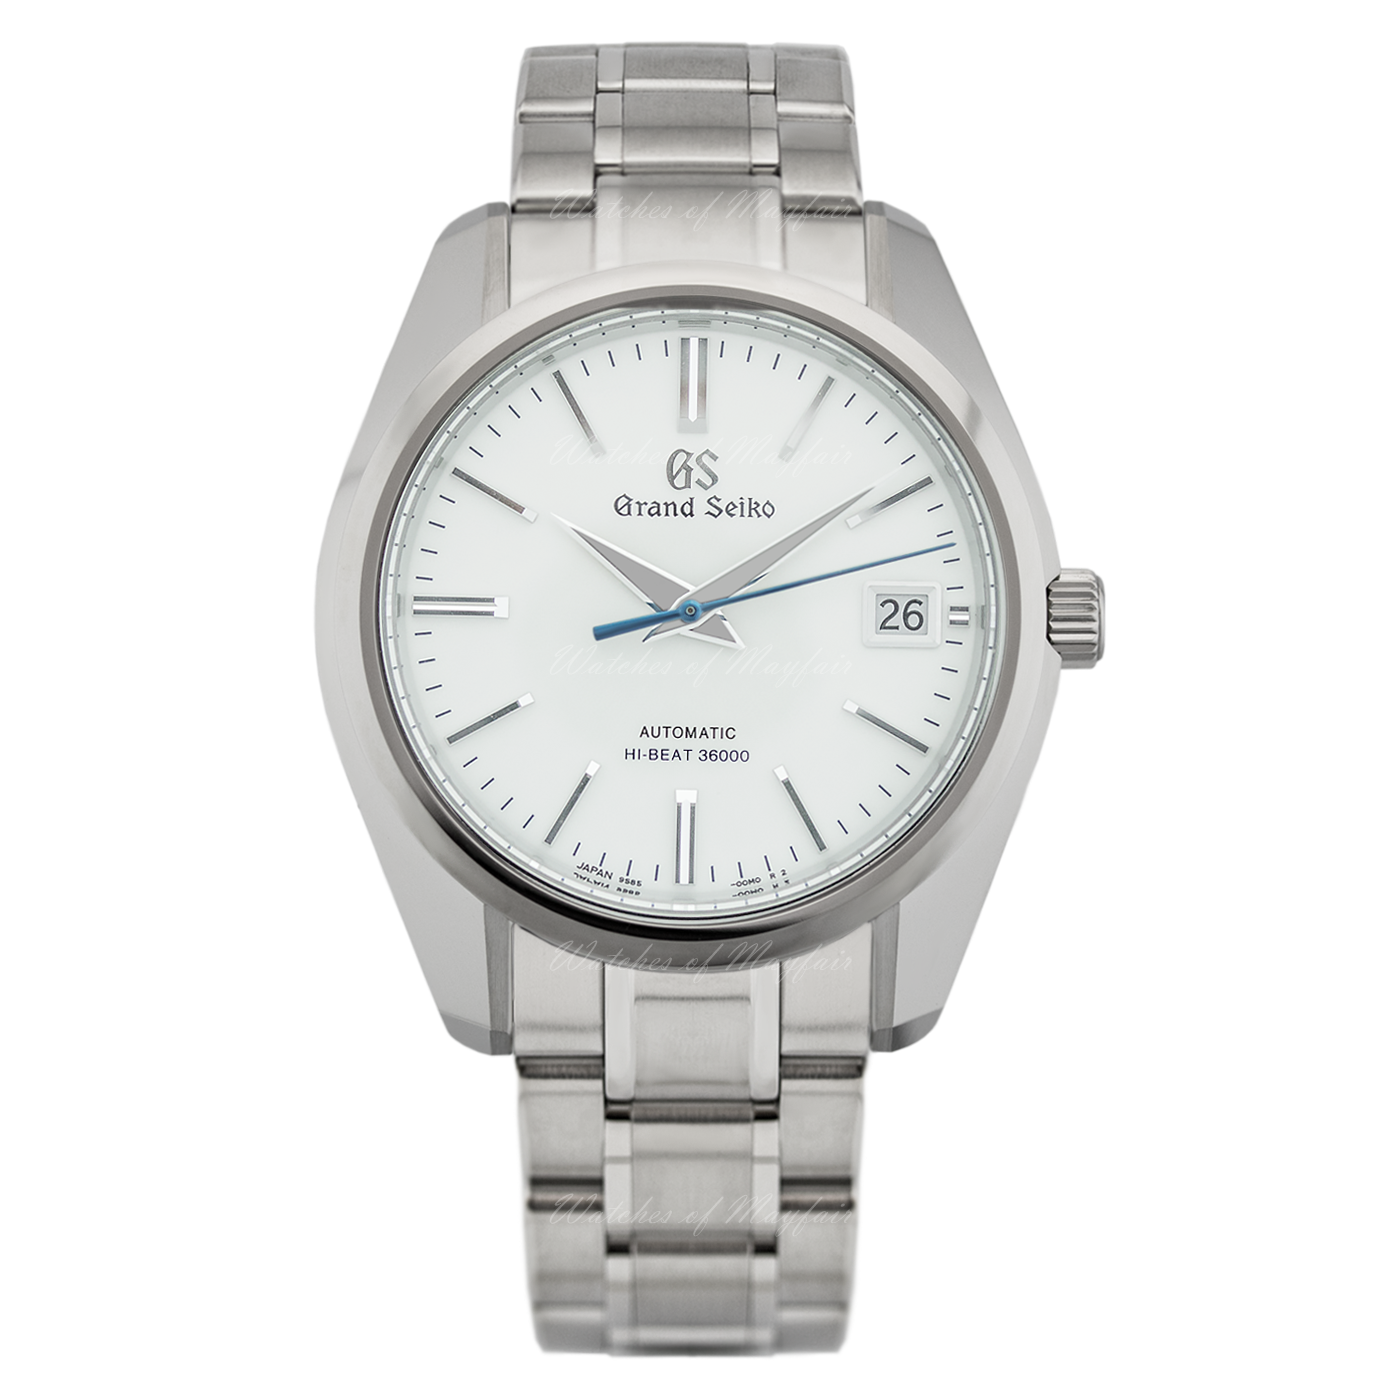 SBGH201 |Grand Seiko Heritage Hi-Beat 36000  watch. Buy Now